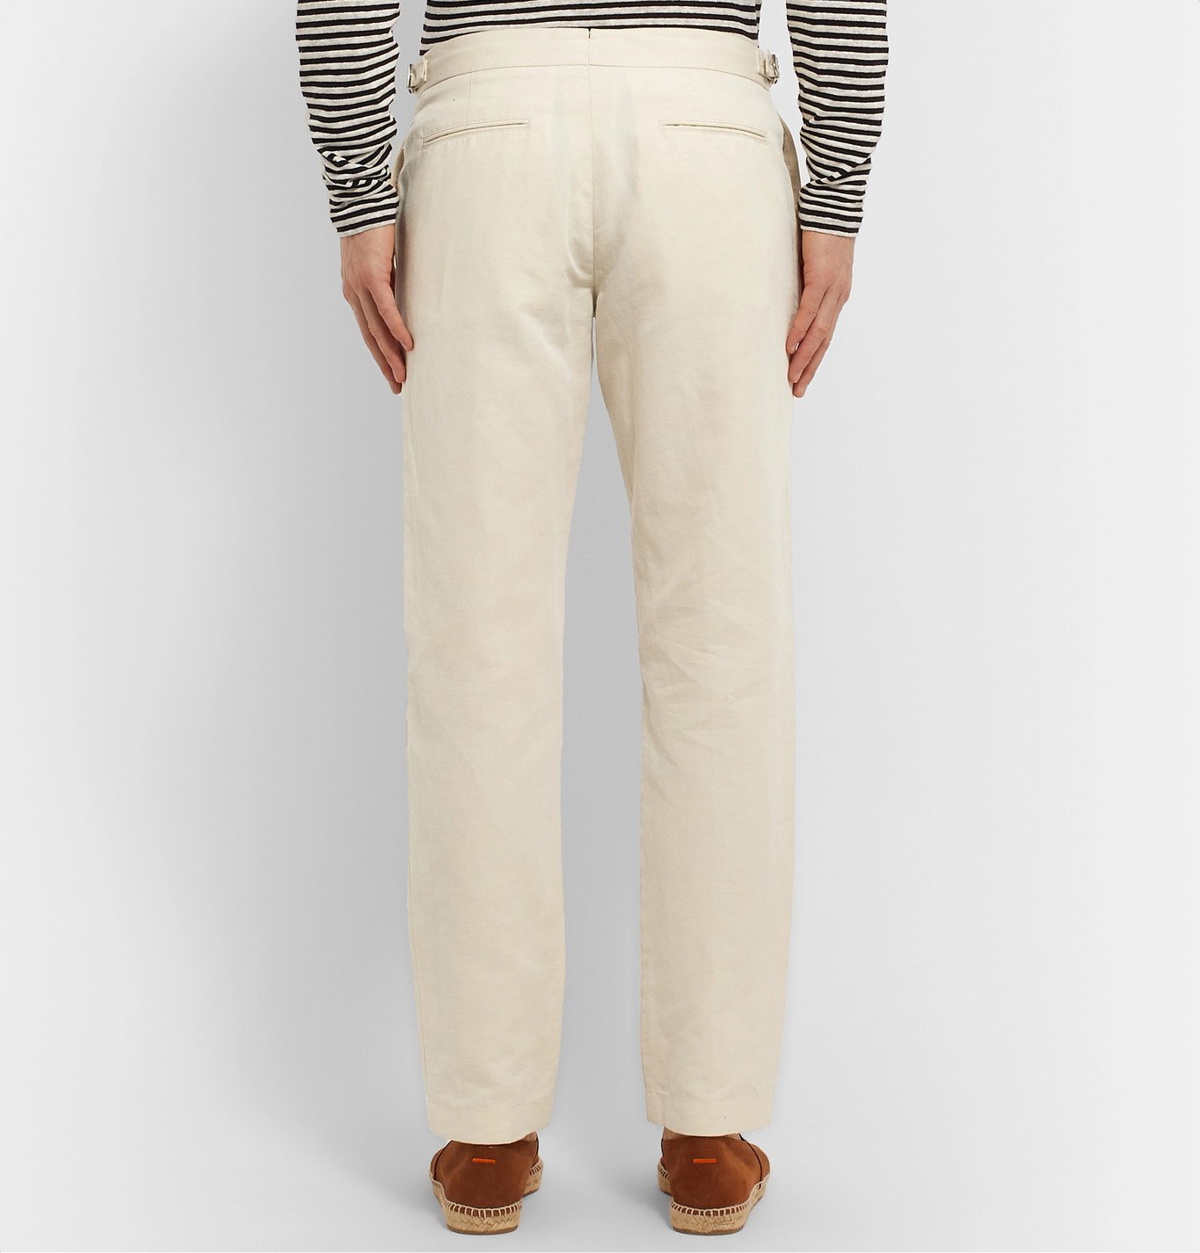 ORLEBAR BROWN, Cornell Merino Wool Pants, Men